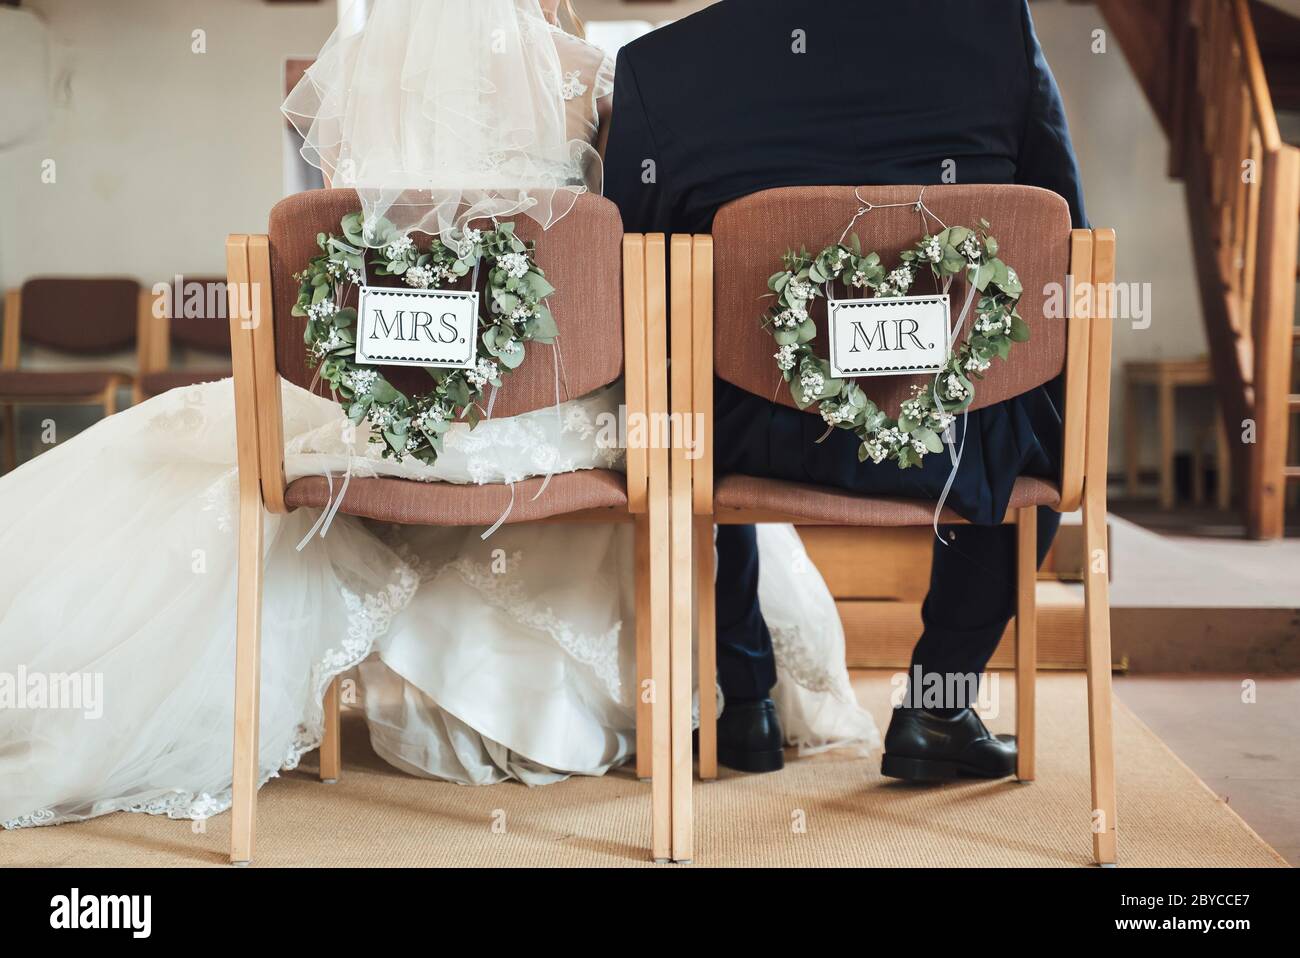 Sillas de boda novios fotografías e imágenes de alta resolución - Alamy